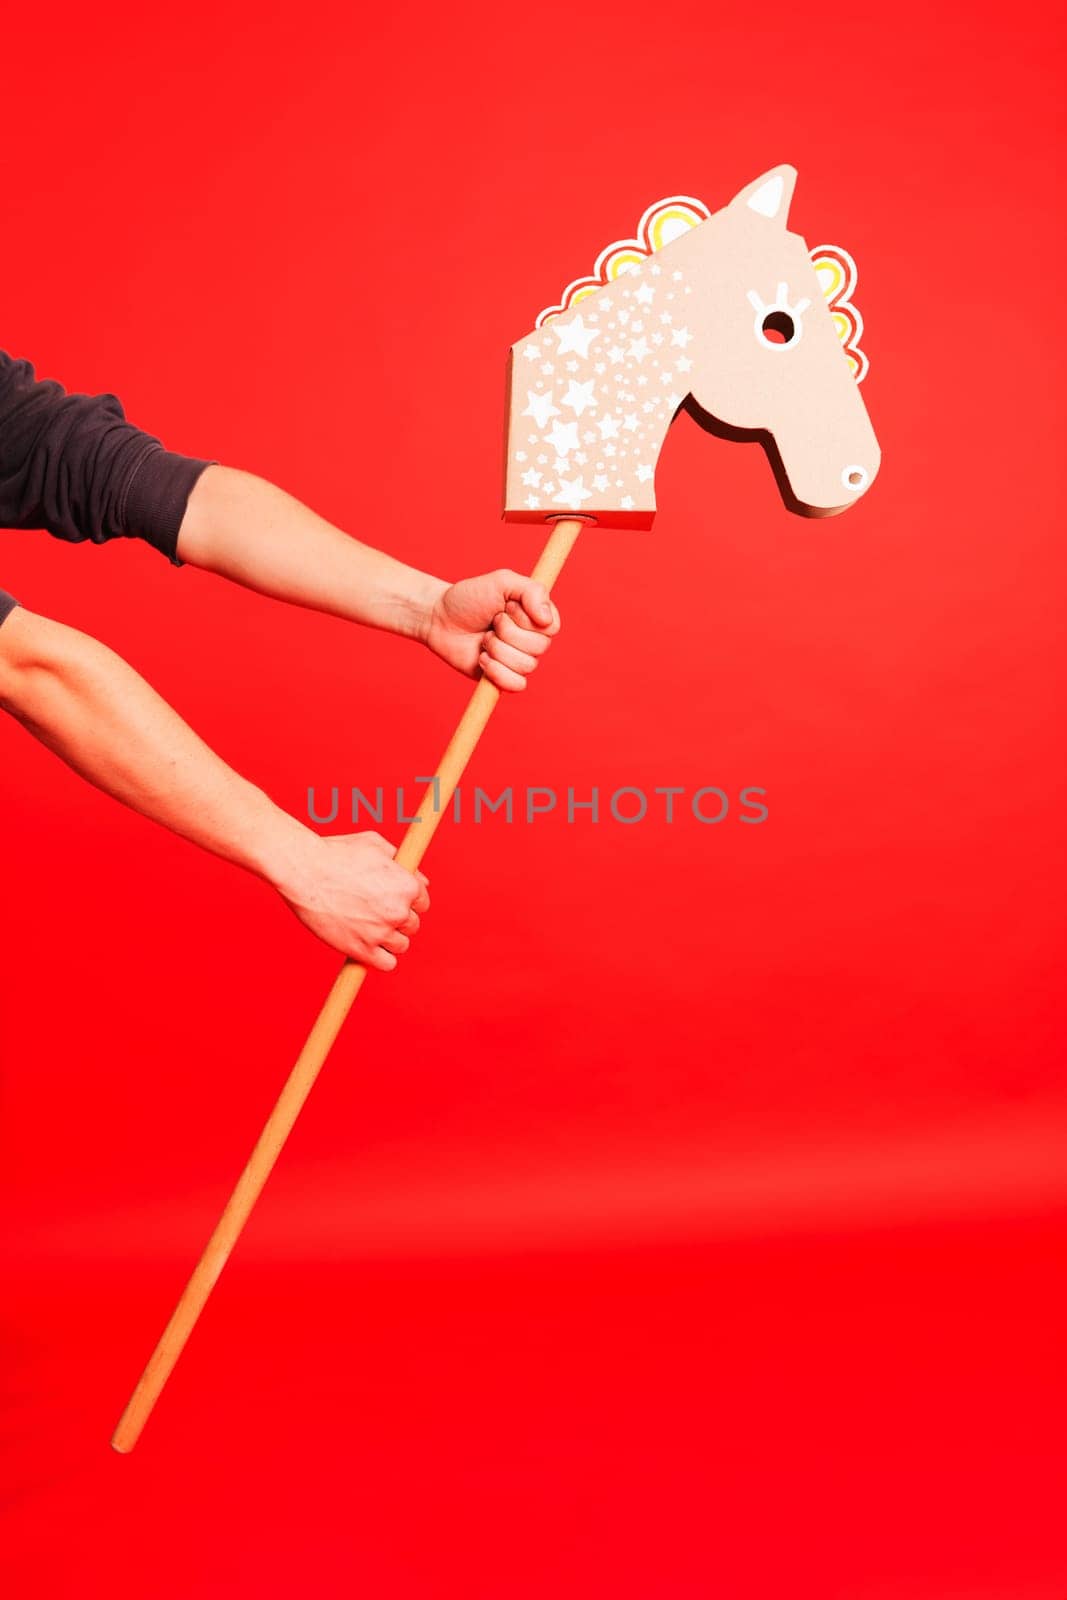 Stick horse, hobby horse. Equestrian sports. Equestrian equipment. Sports. Banner by sarymsakov